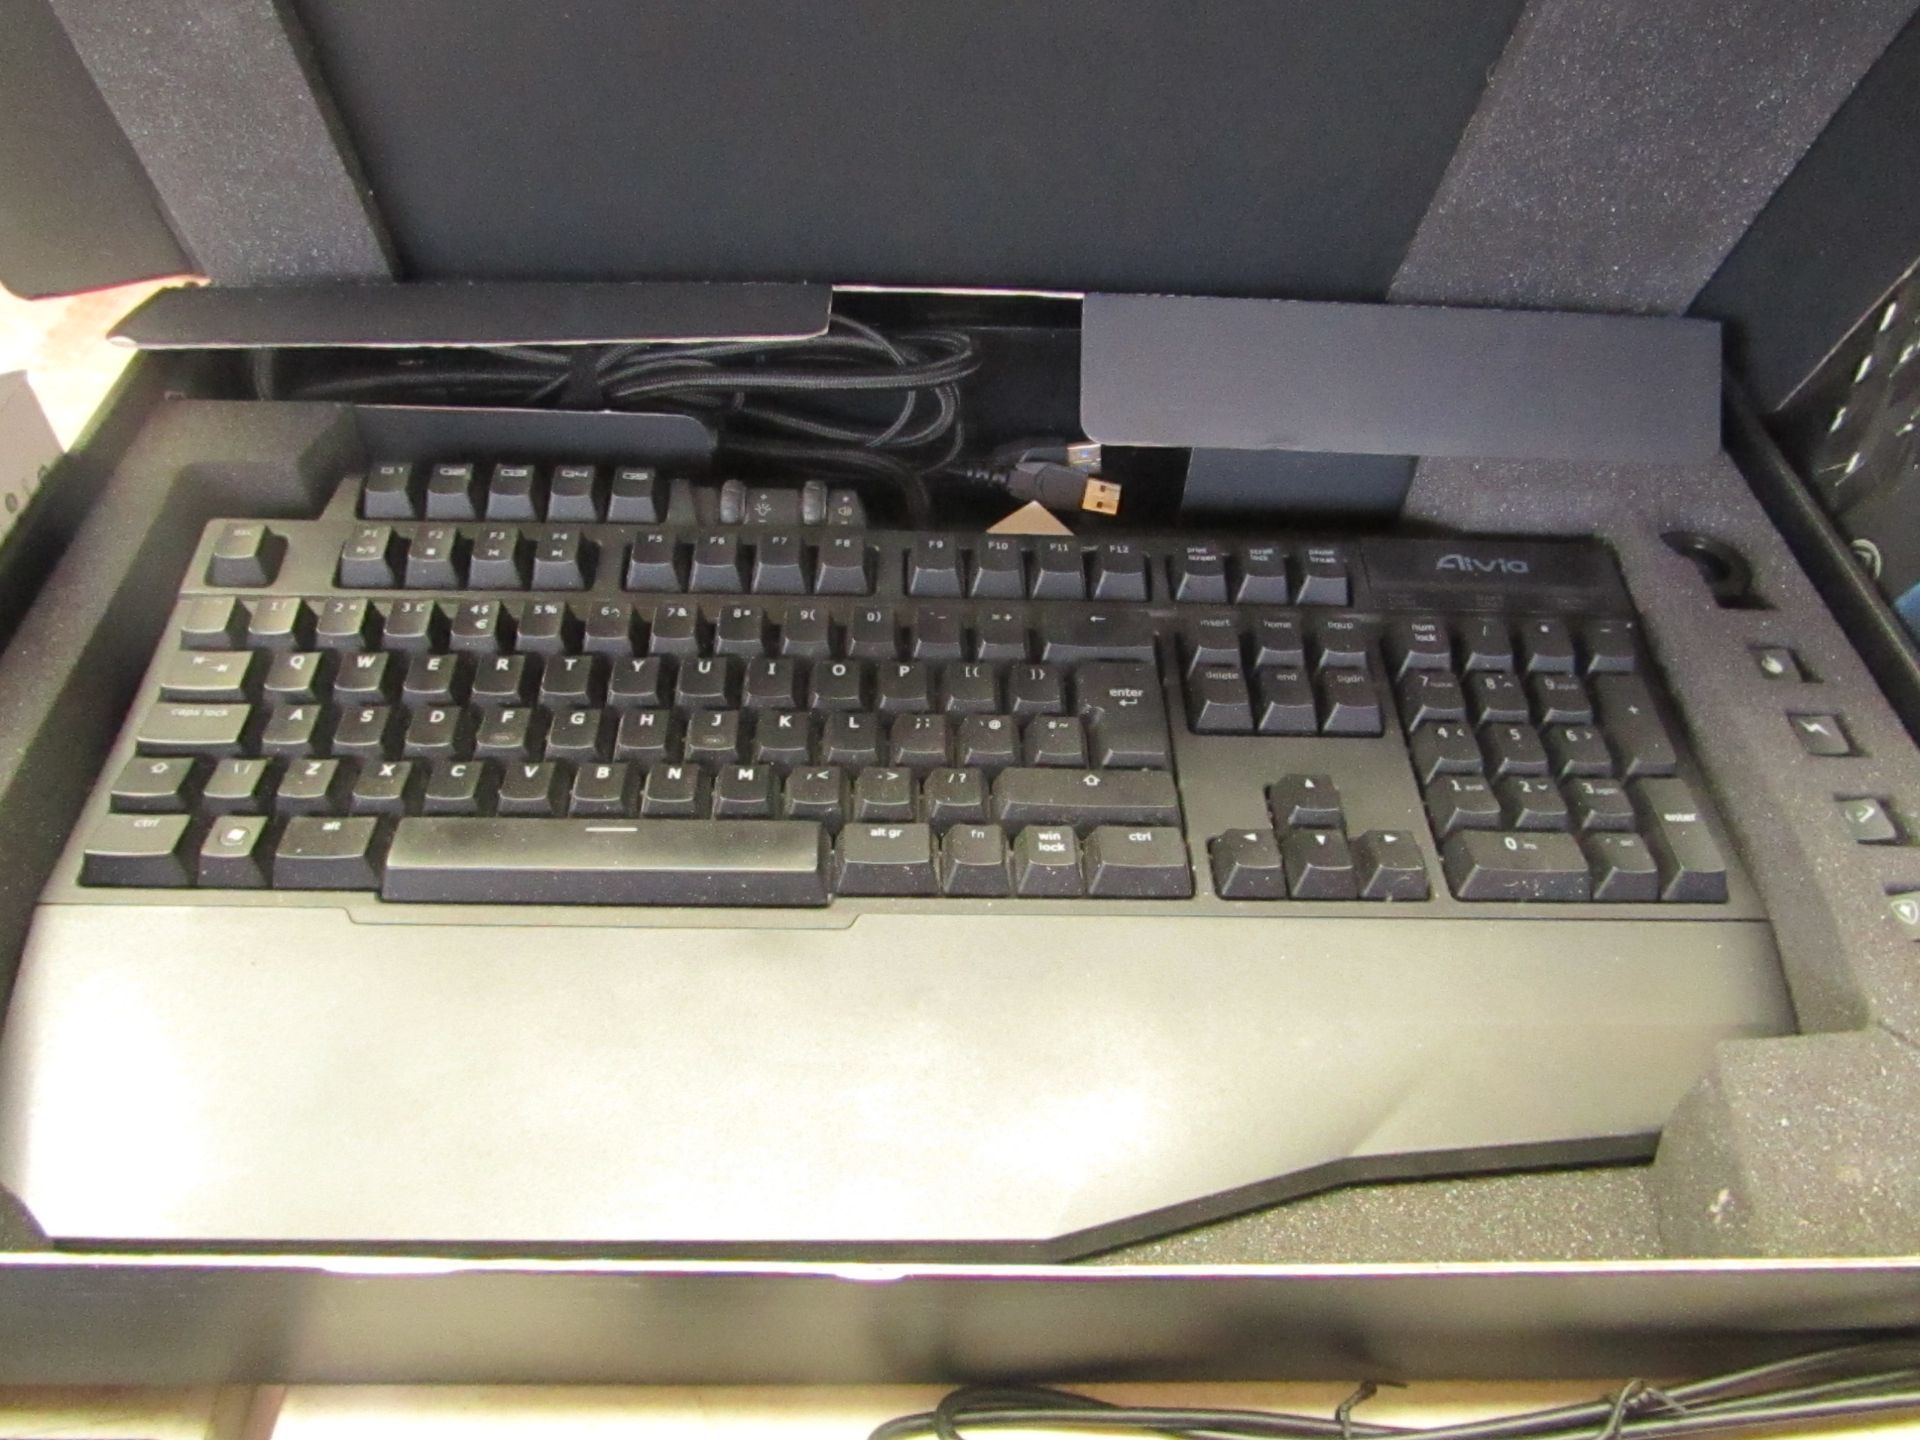 Gigabyte osmium Alivia mechanical gaming keyboard, RRP circa £60, tested working and lights up